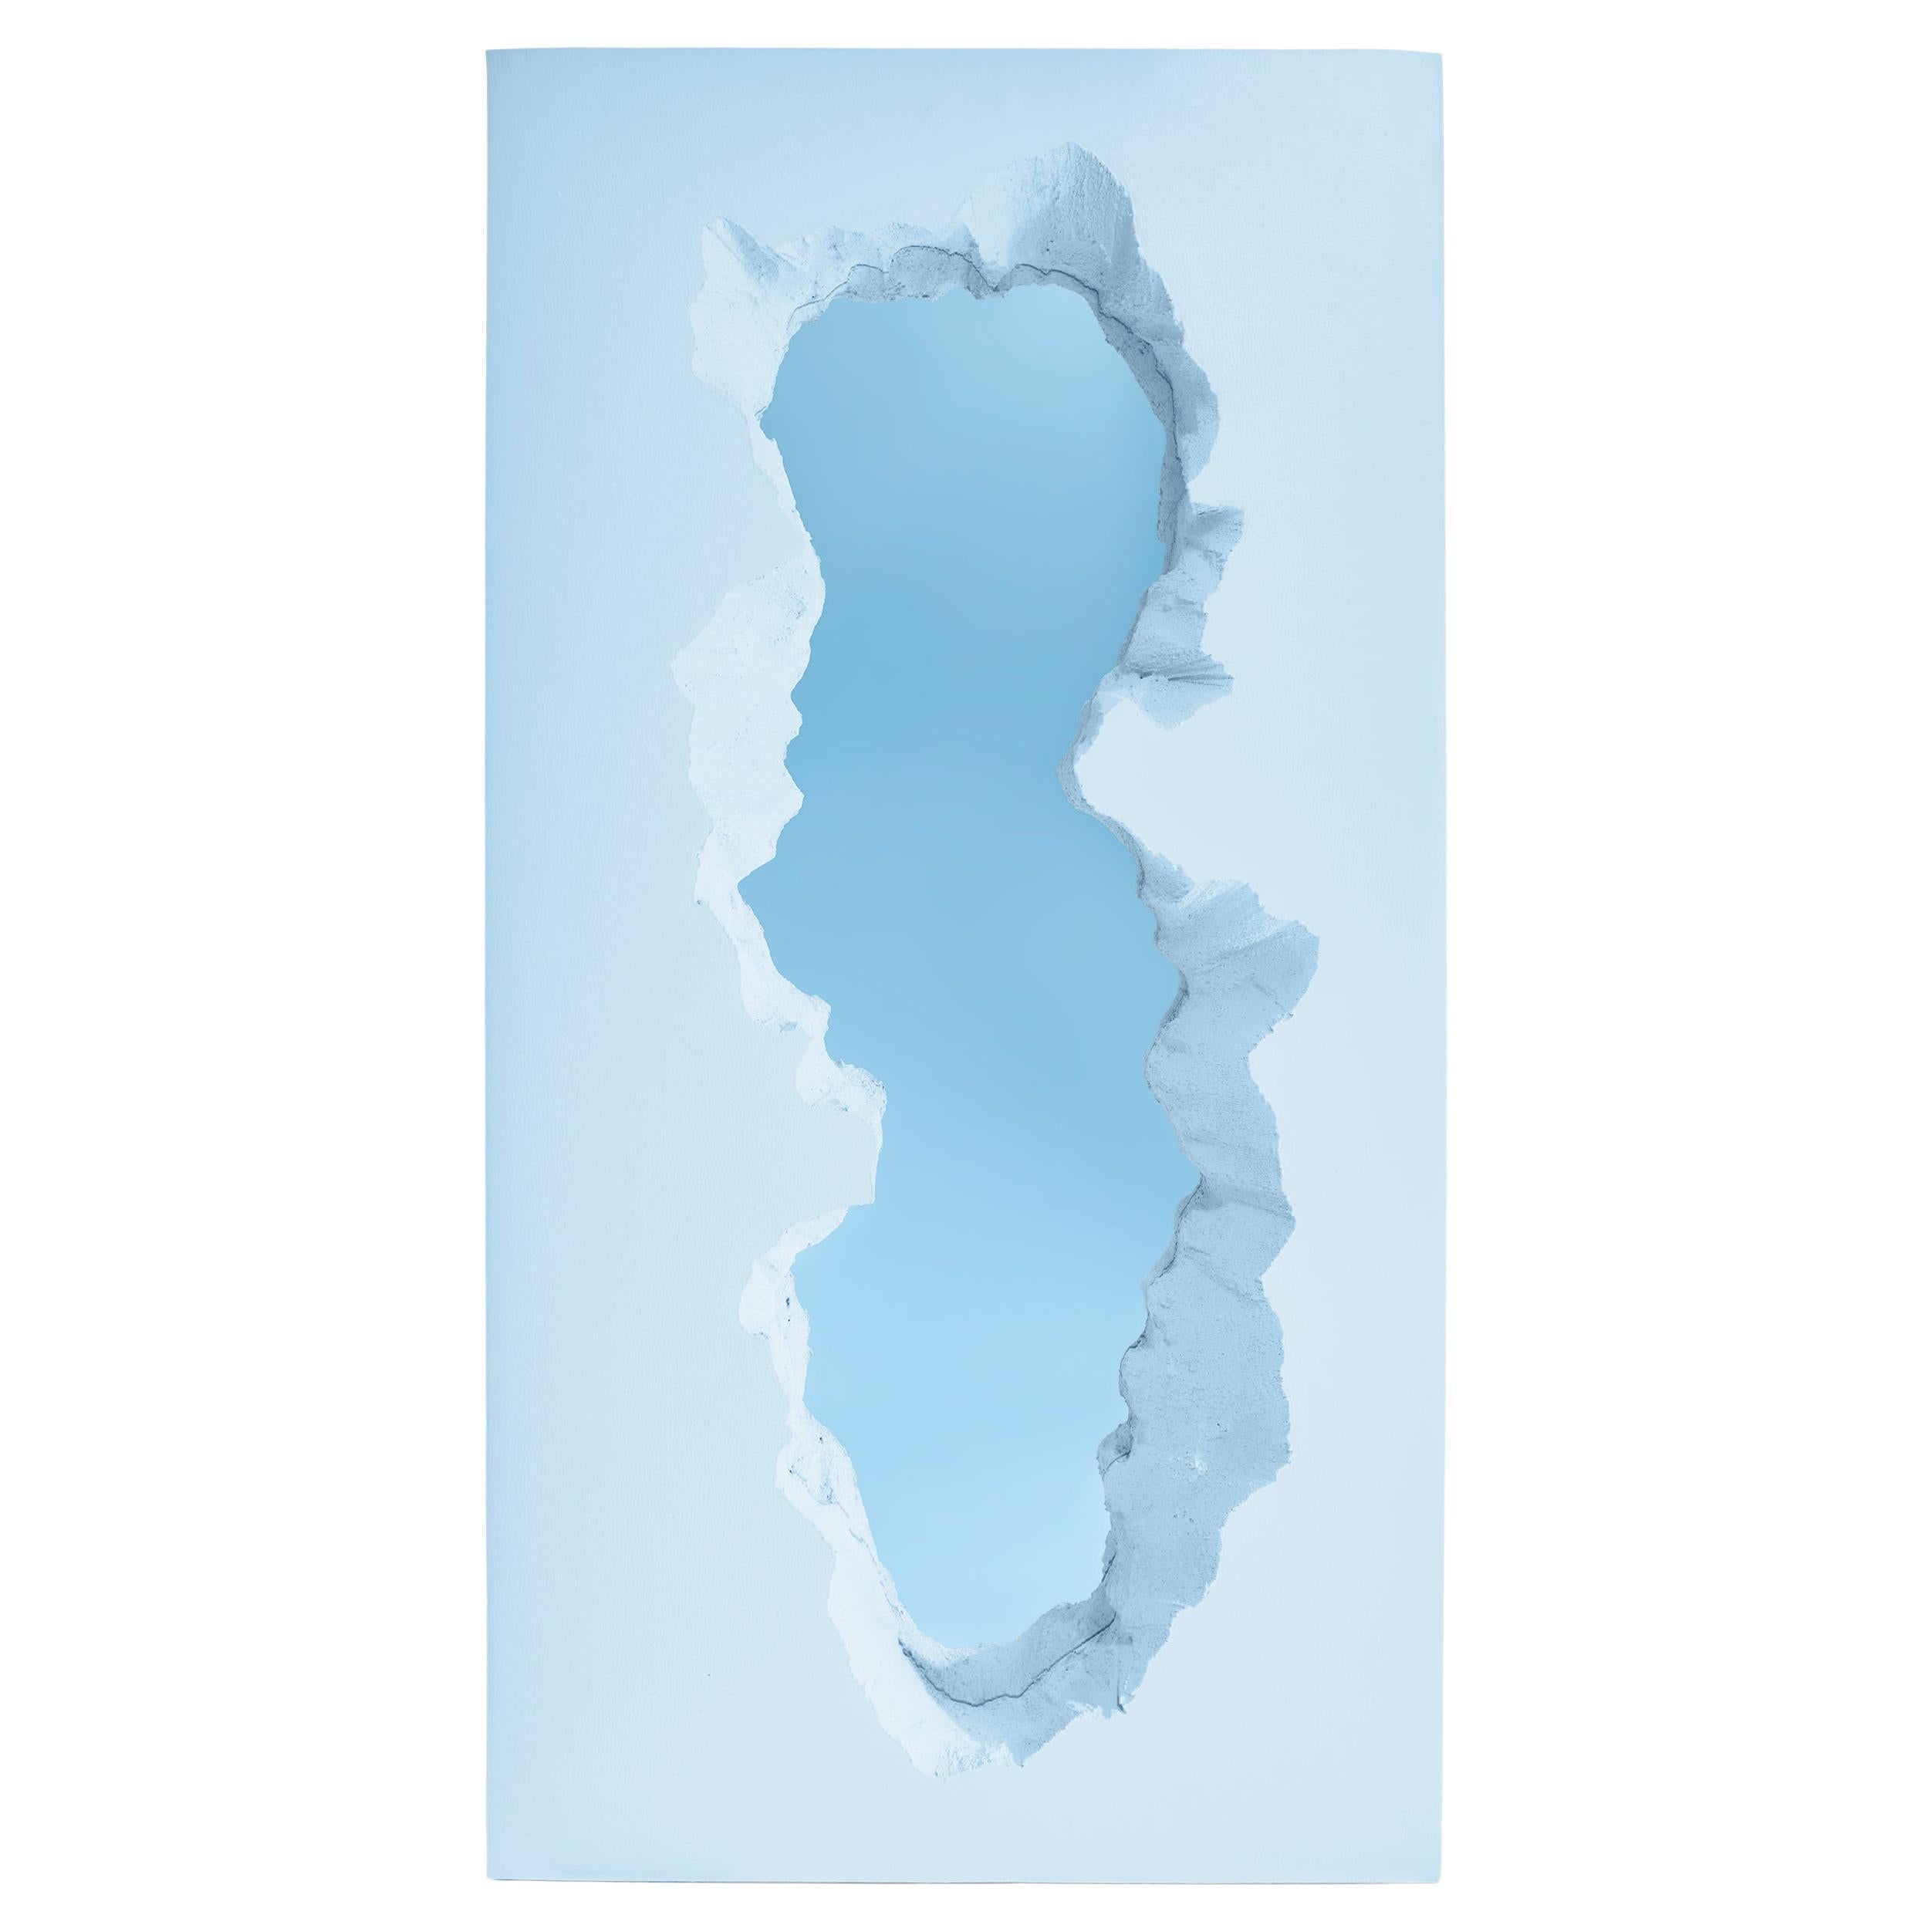 Gufram Broken Mirror by Snarkitecture - Blue edition 1/33 en vente